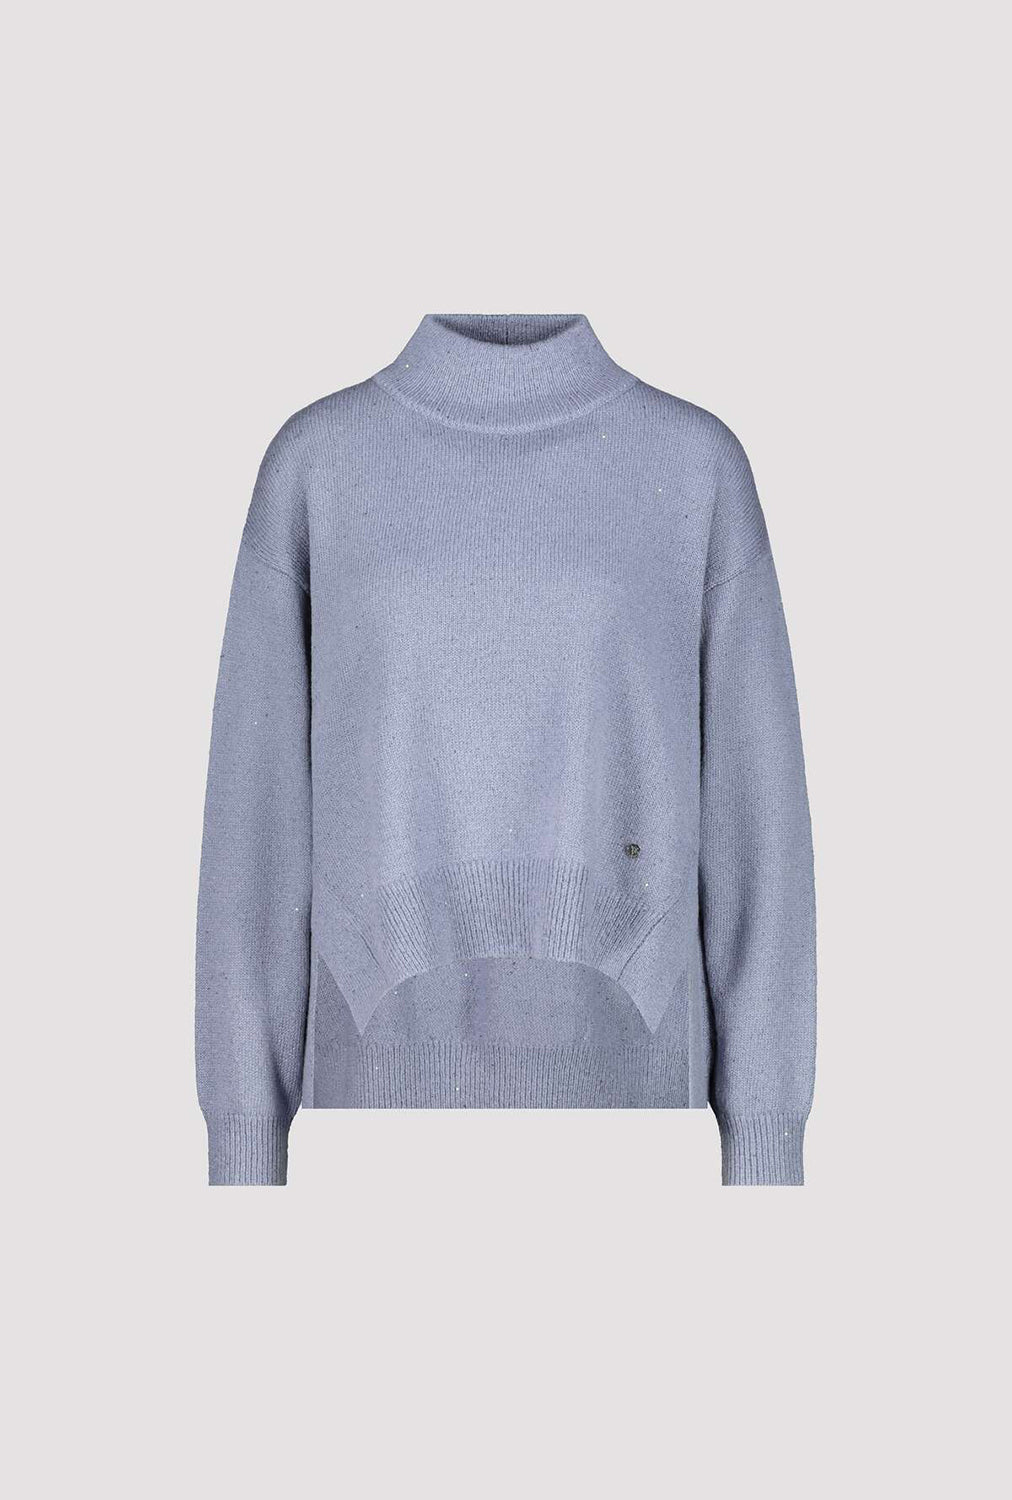 Monari Sweater Sequins 807455